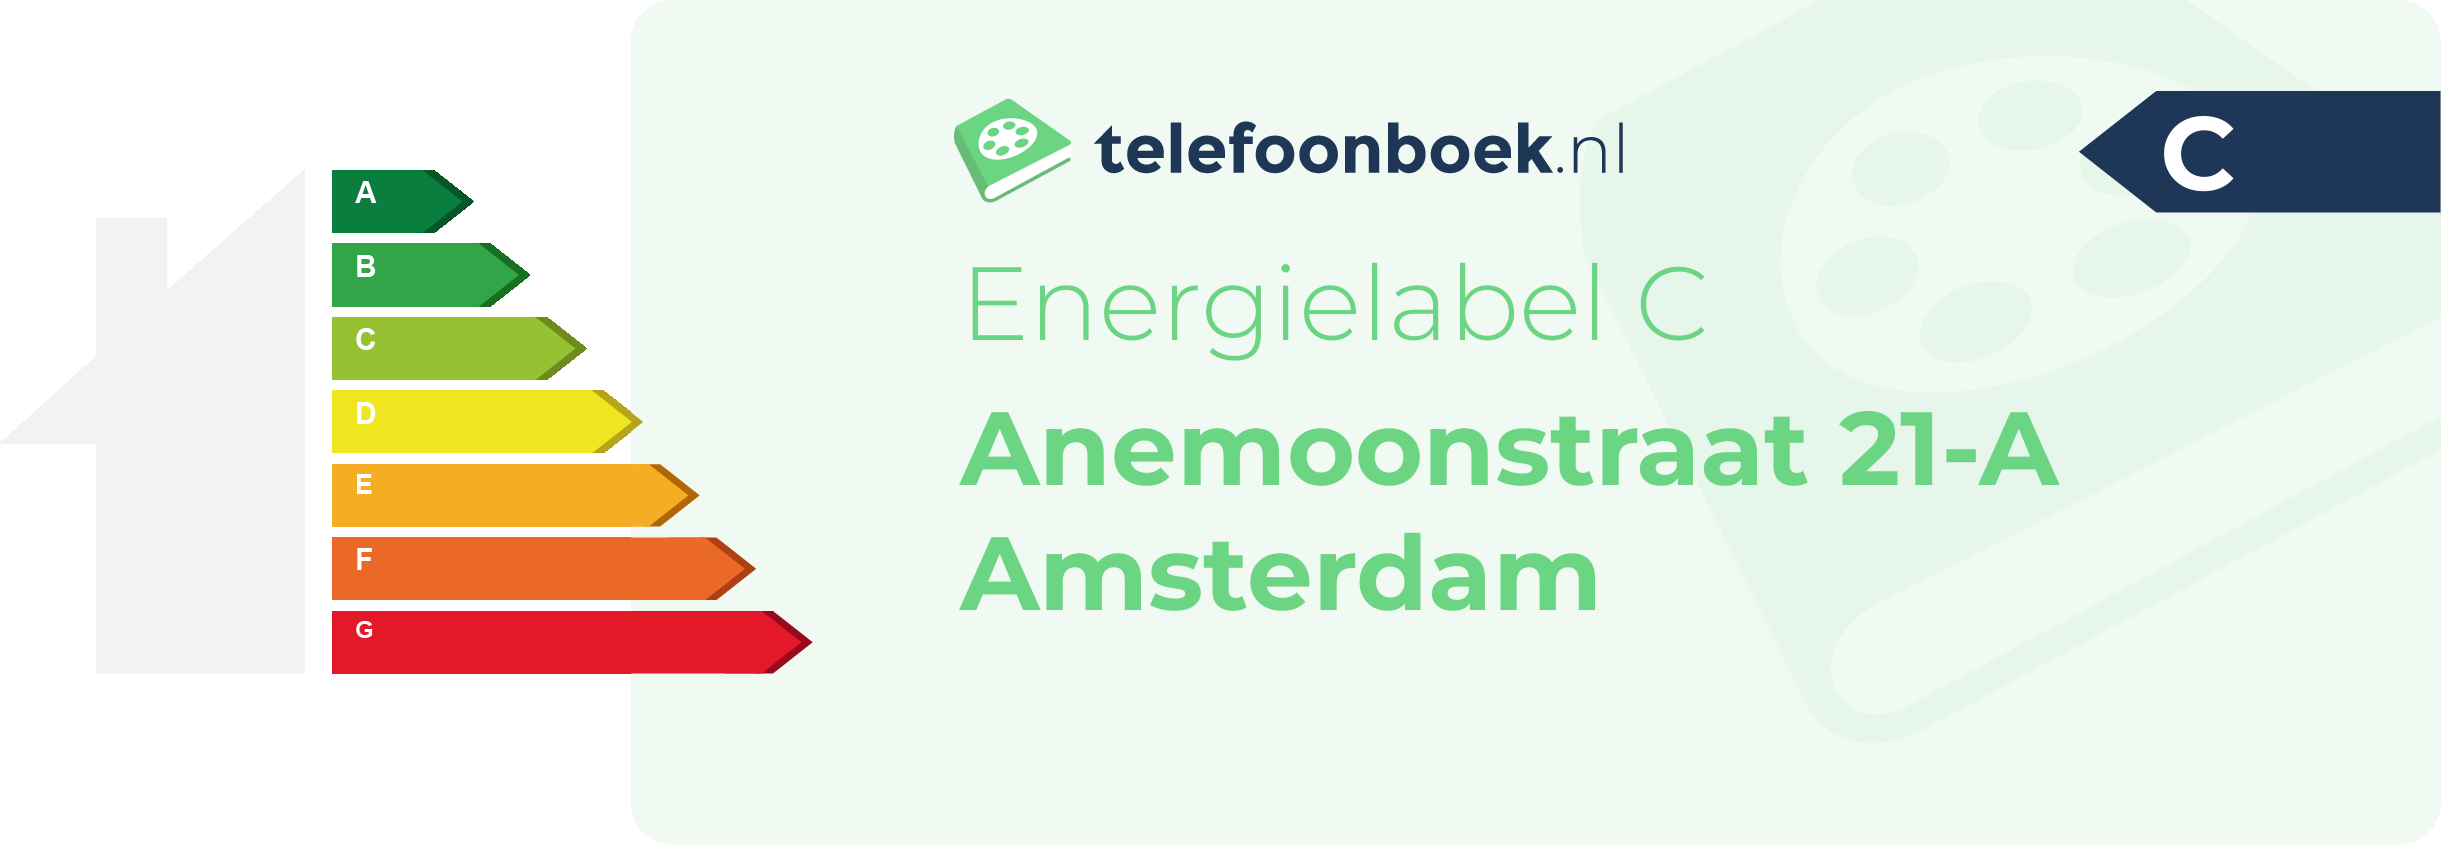 Energielabel Anemoonstraat 21-A Amsterdam